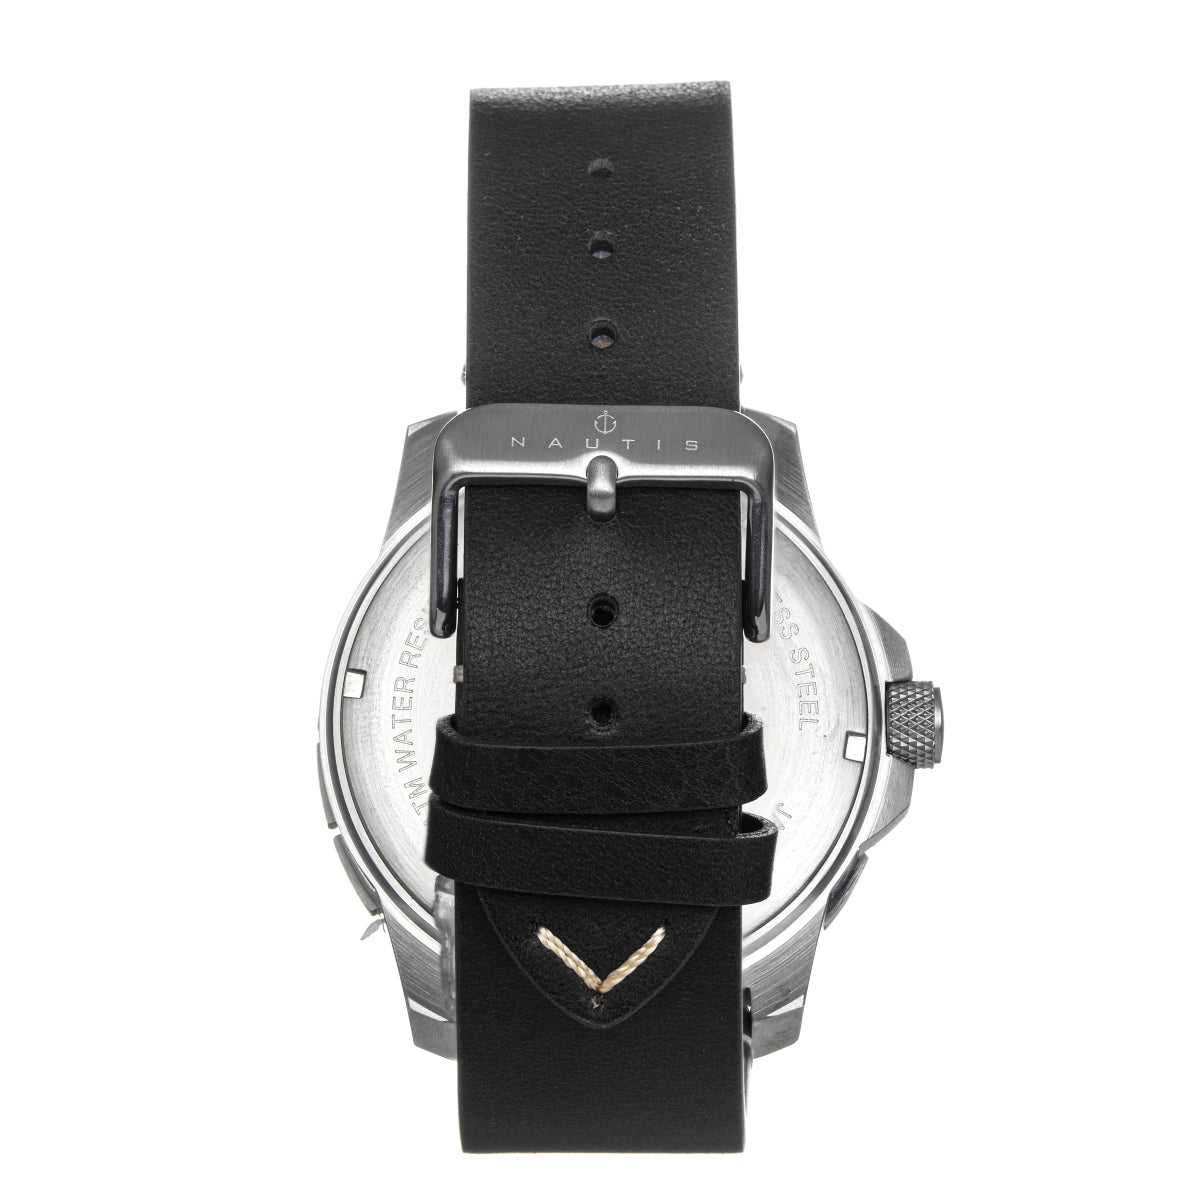 Nautis Dive Pro 200 Leather-Band Watch w/Date - Orange/Black - GL1909-H